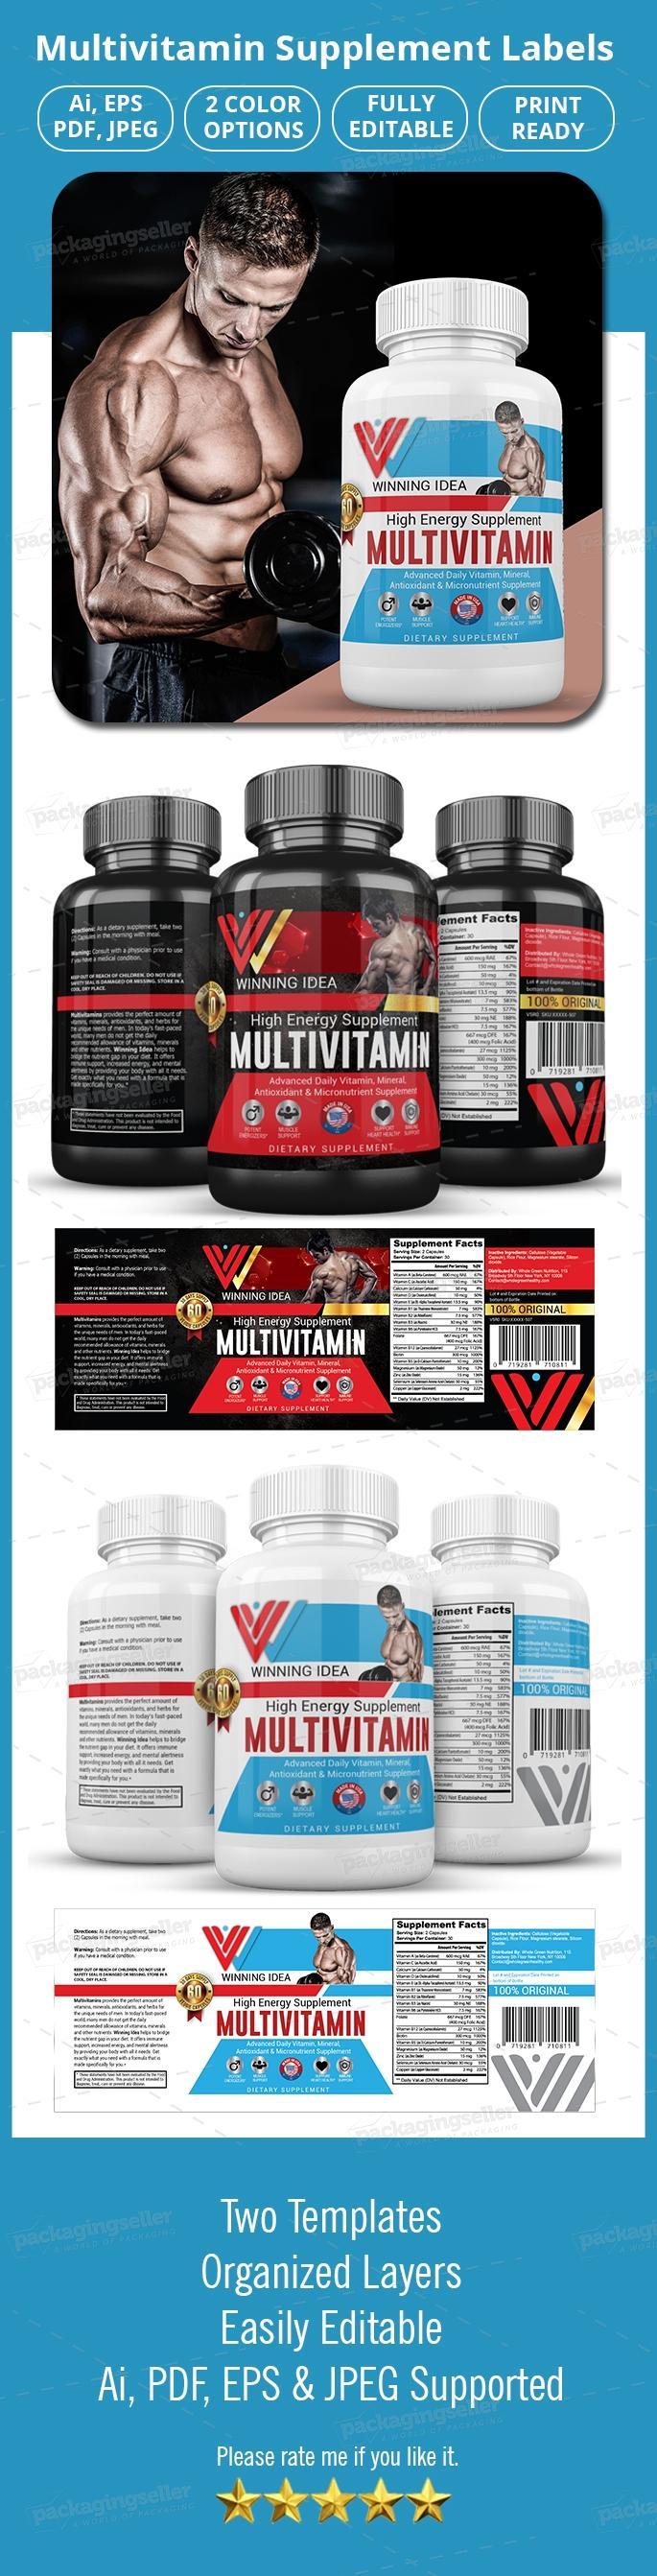 Multivitamin Supplement Label Template